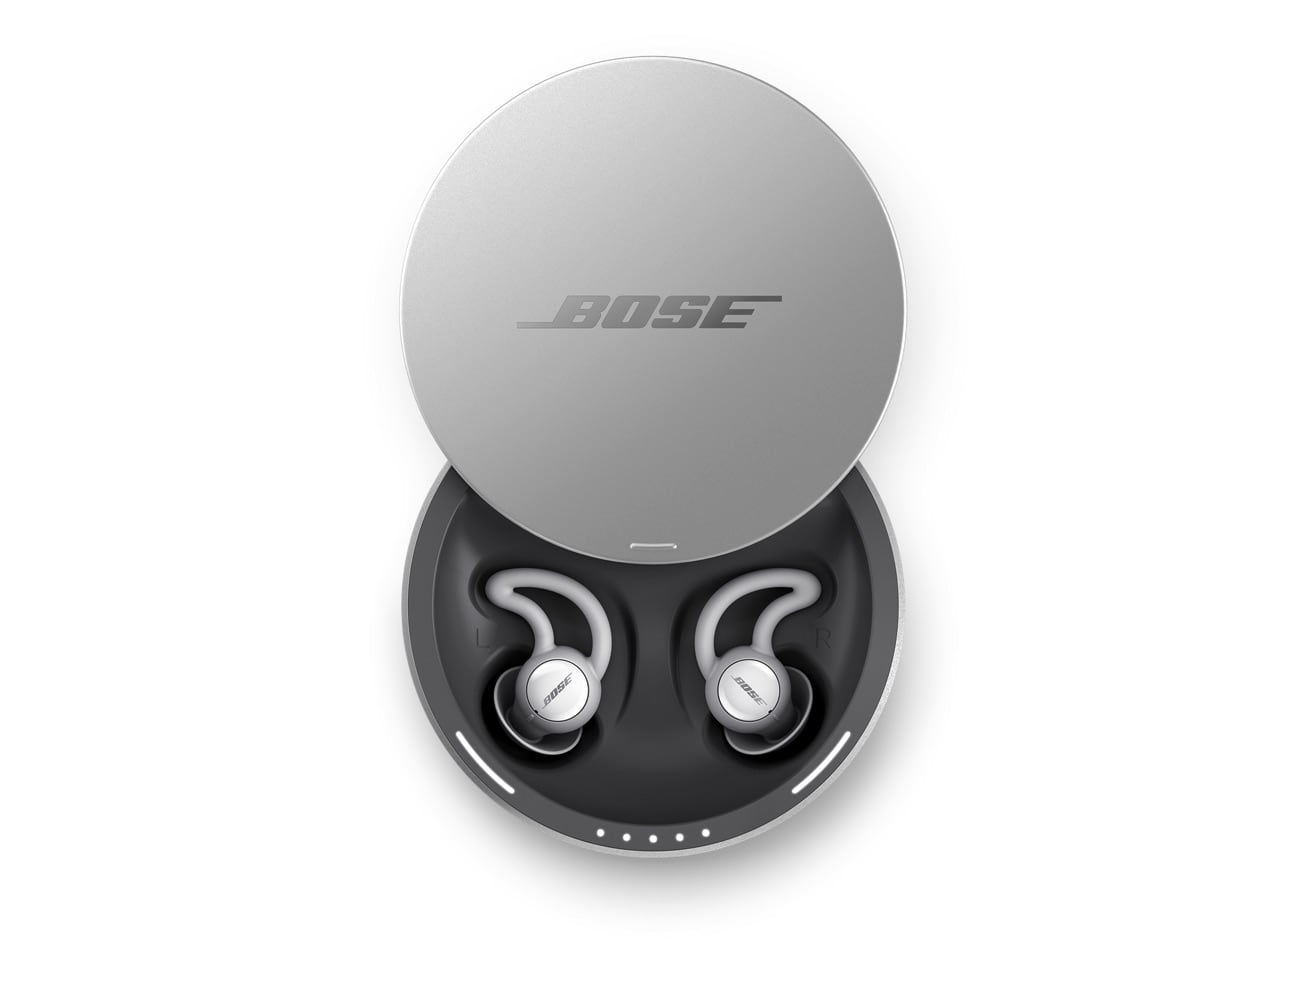 Bose เปิดตัวหูฟังที่ไม่ได้เอาไว้ใช้สำหรับฟังเพลง!